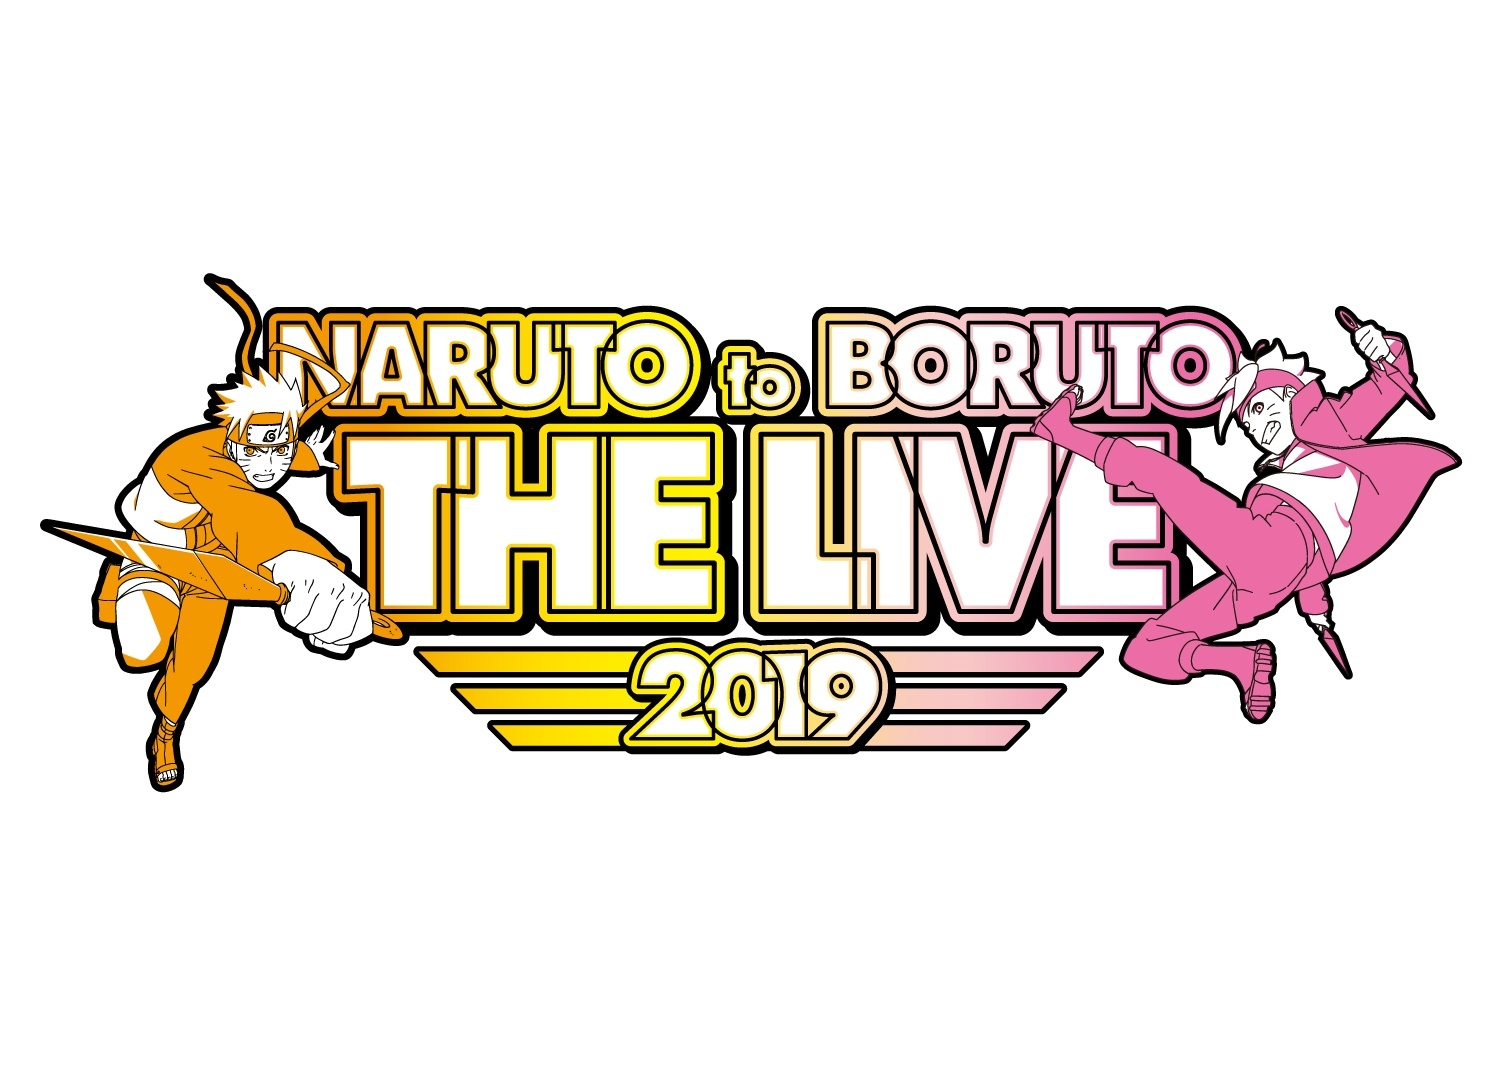 Naruto To Boruto The Live 19 10月5日 土 6 日 開催 アニメイトタイムズ